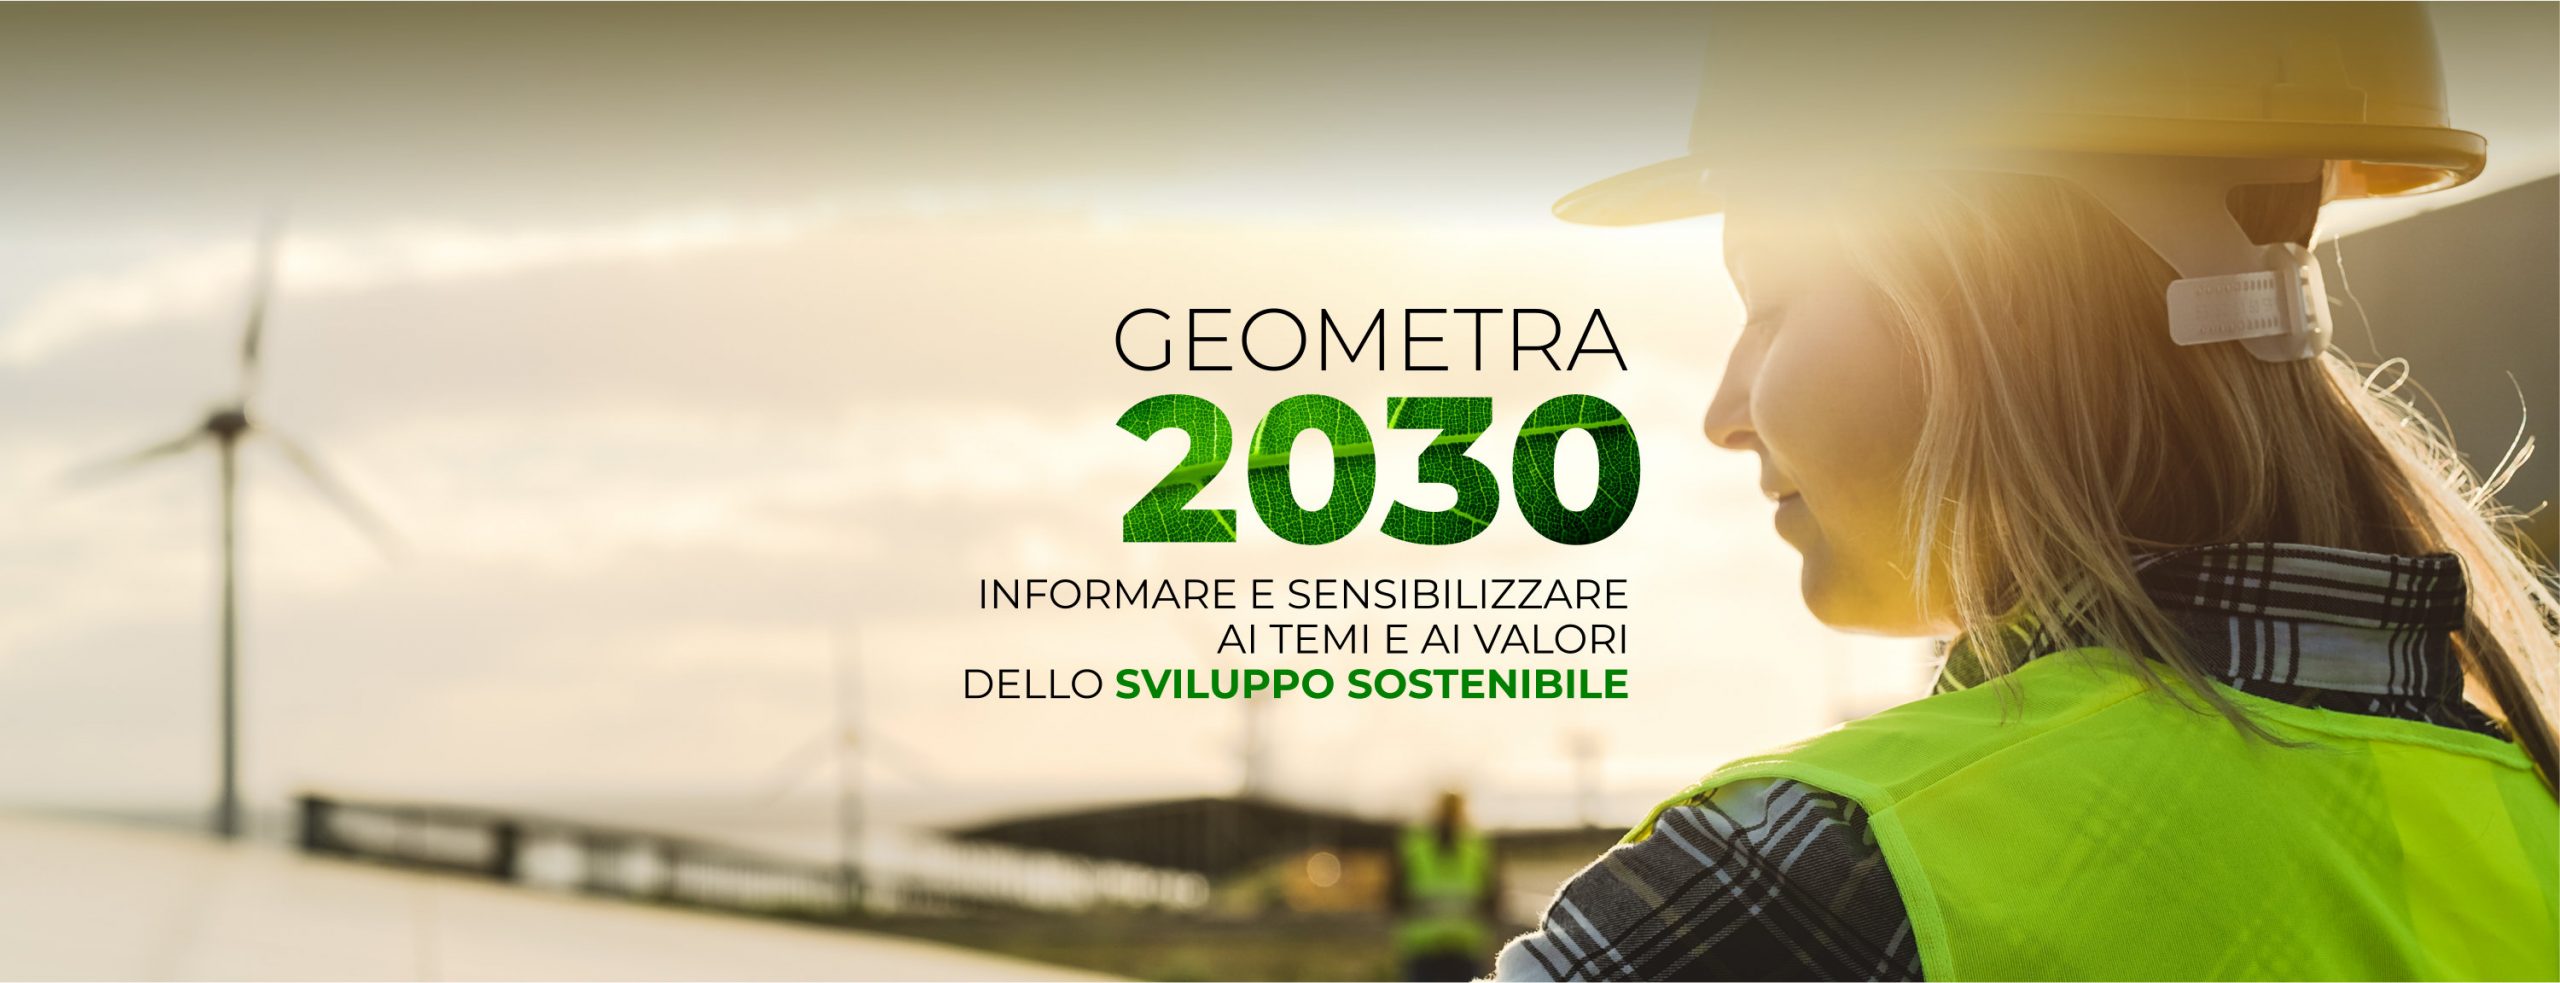 Geometra 2030